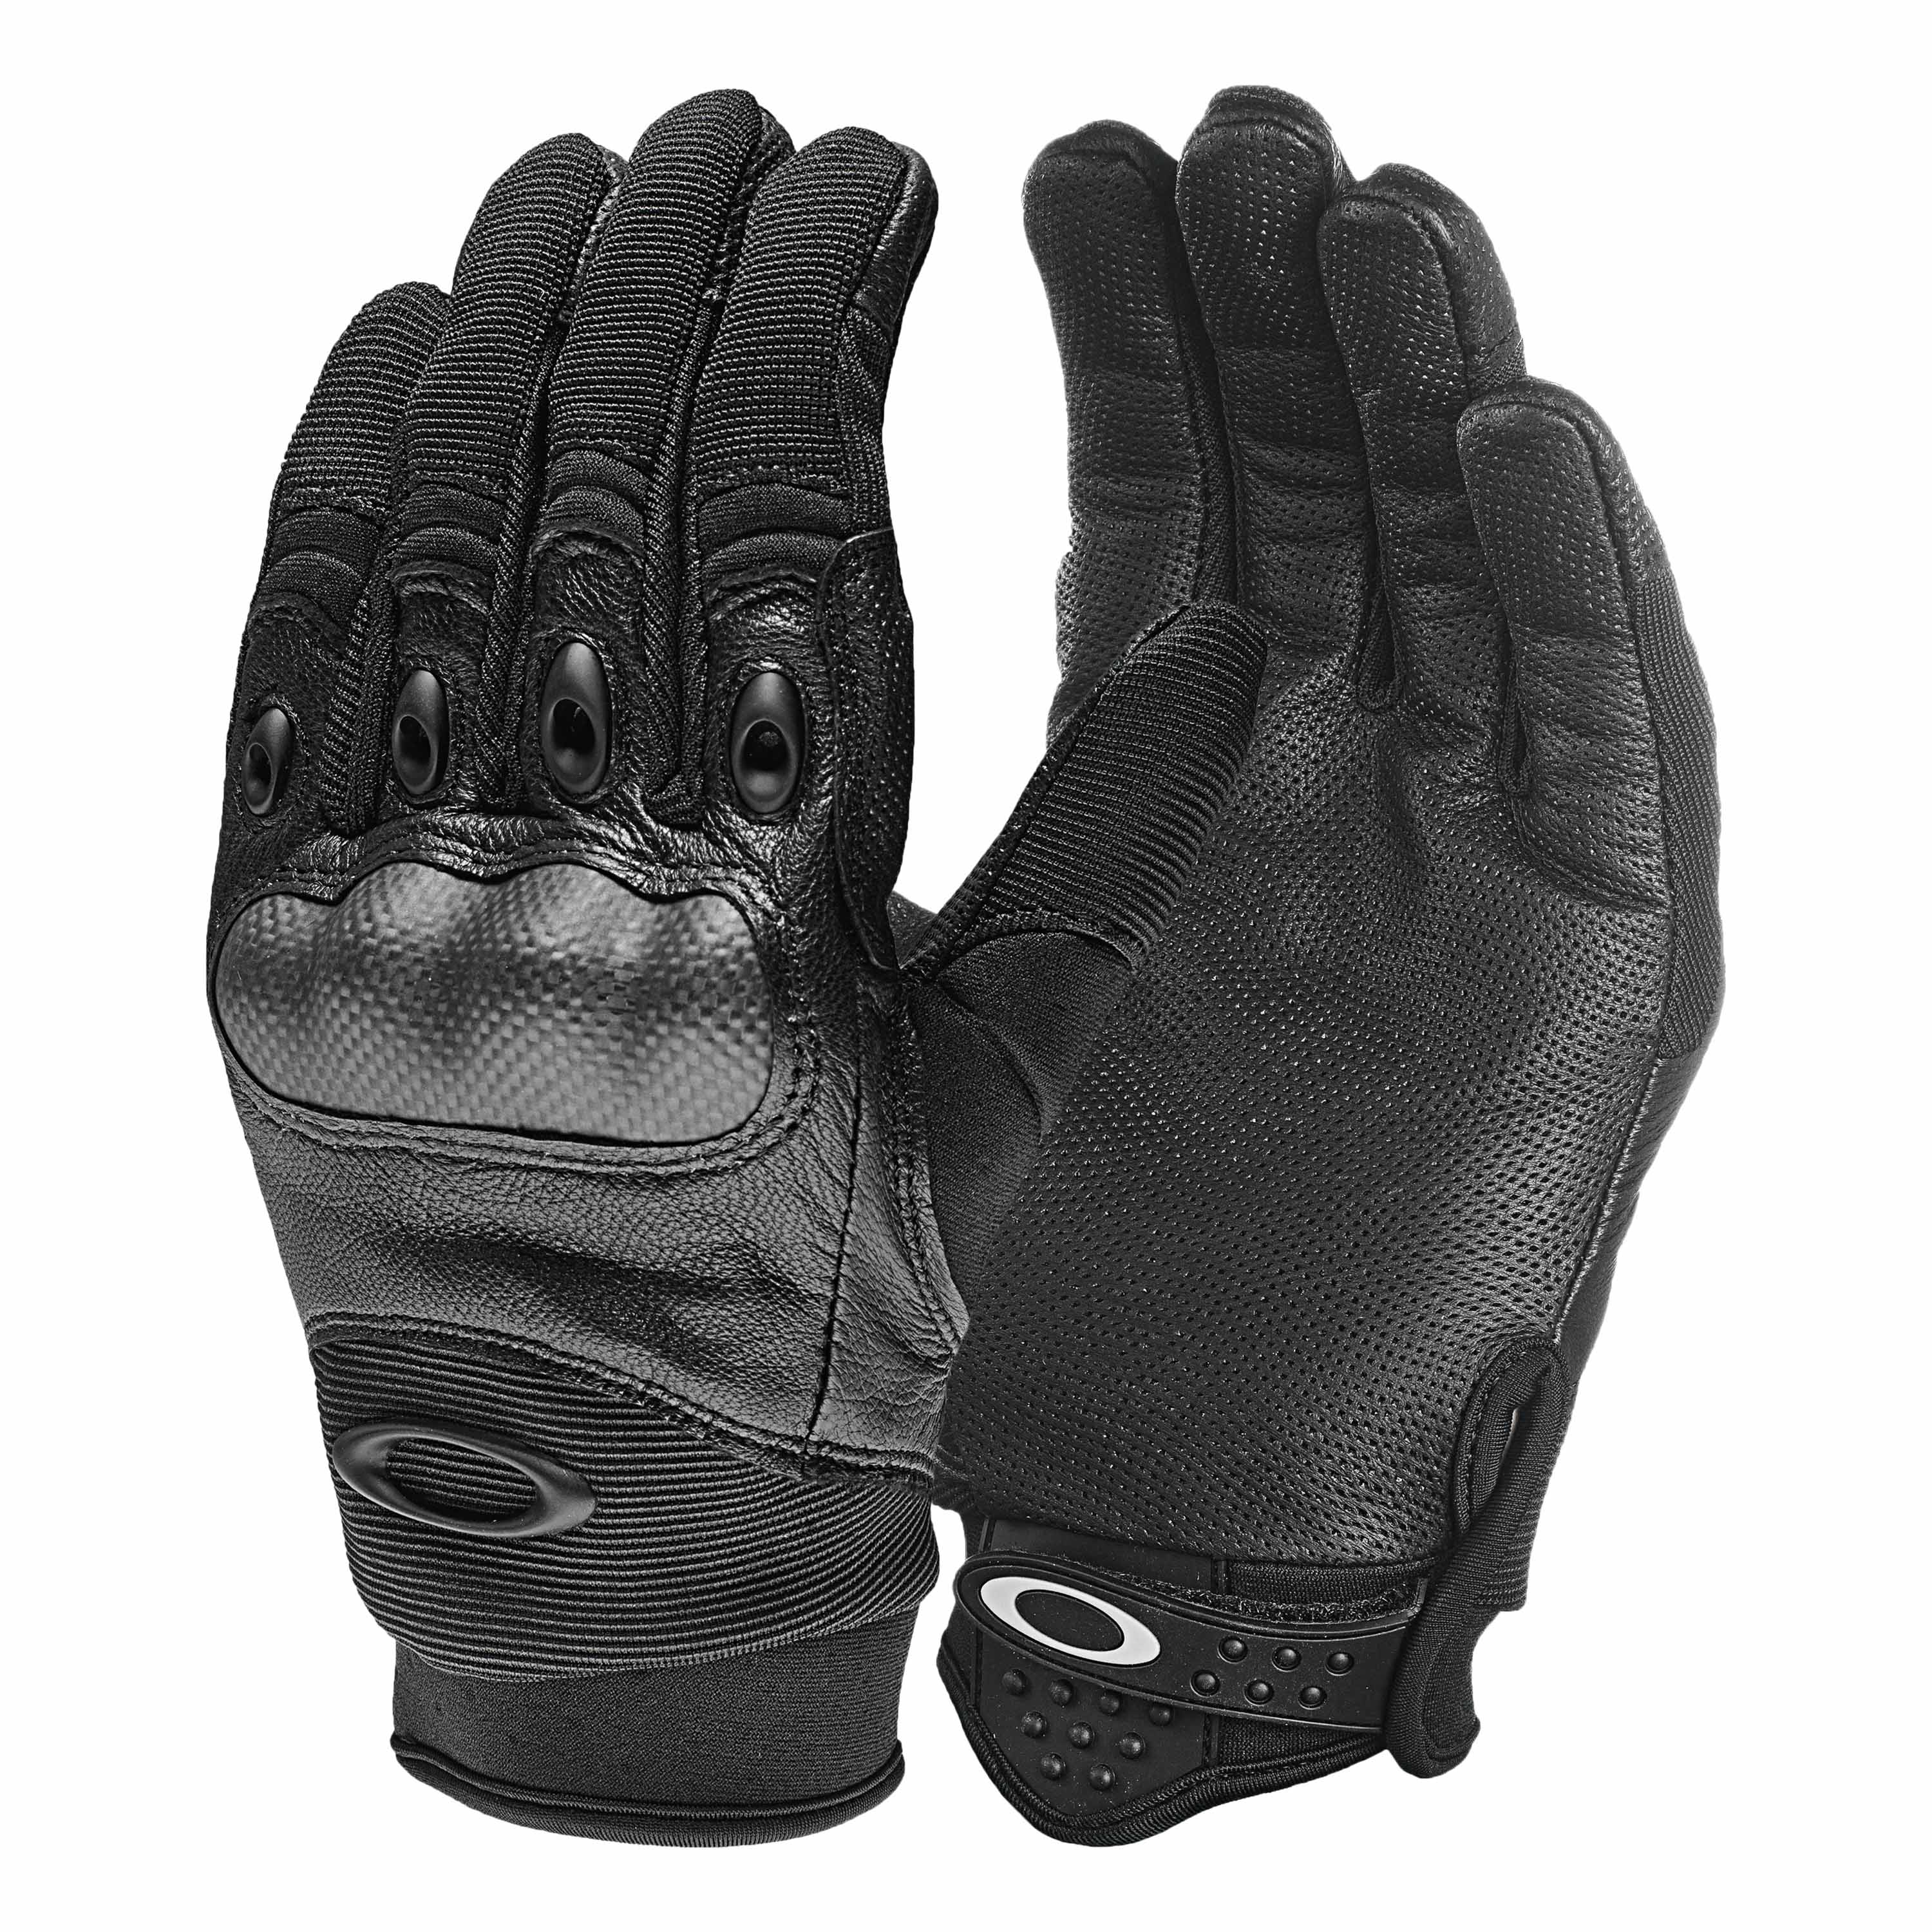 oakley gloves tactical